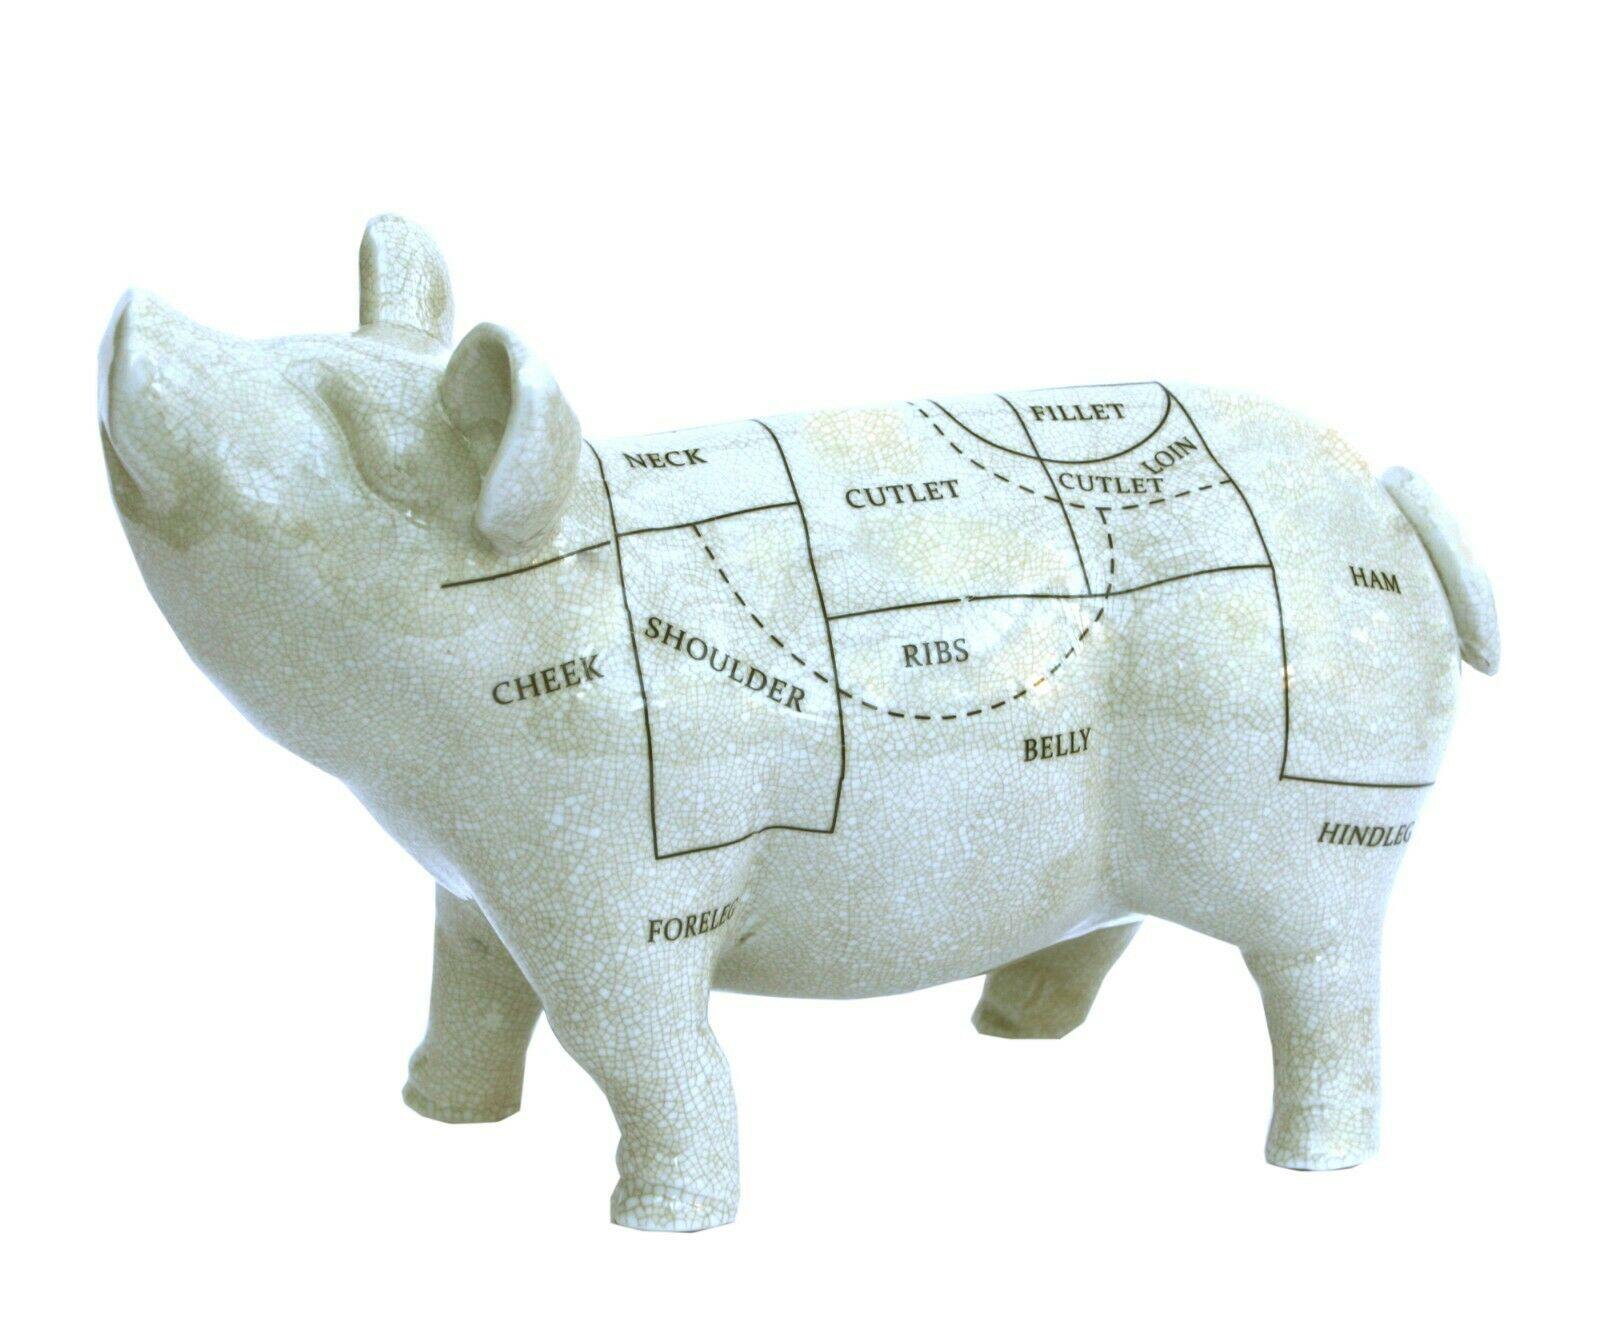 Ceramic Pig Ornament with Butcher's Cuts Diagram Kitchen Sculpture 32cm - Kporium Home & Garden